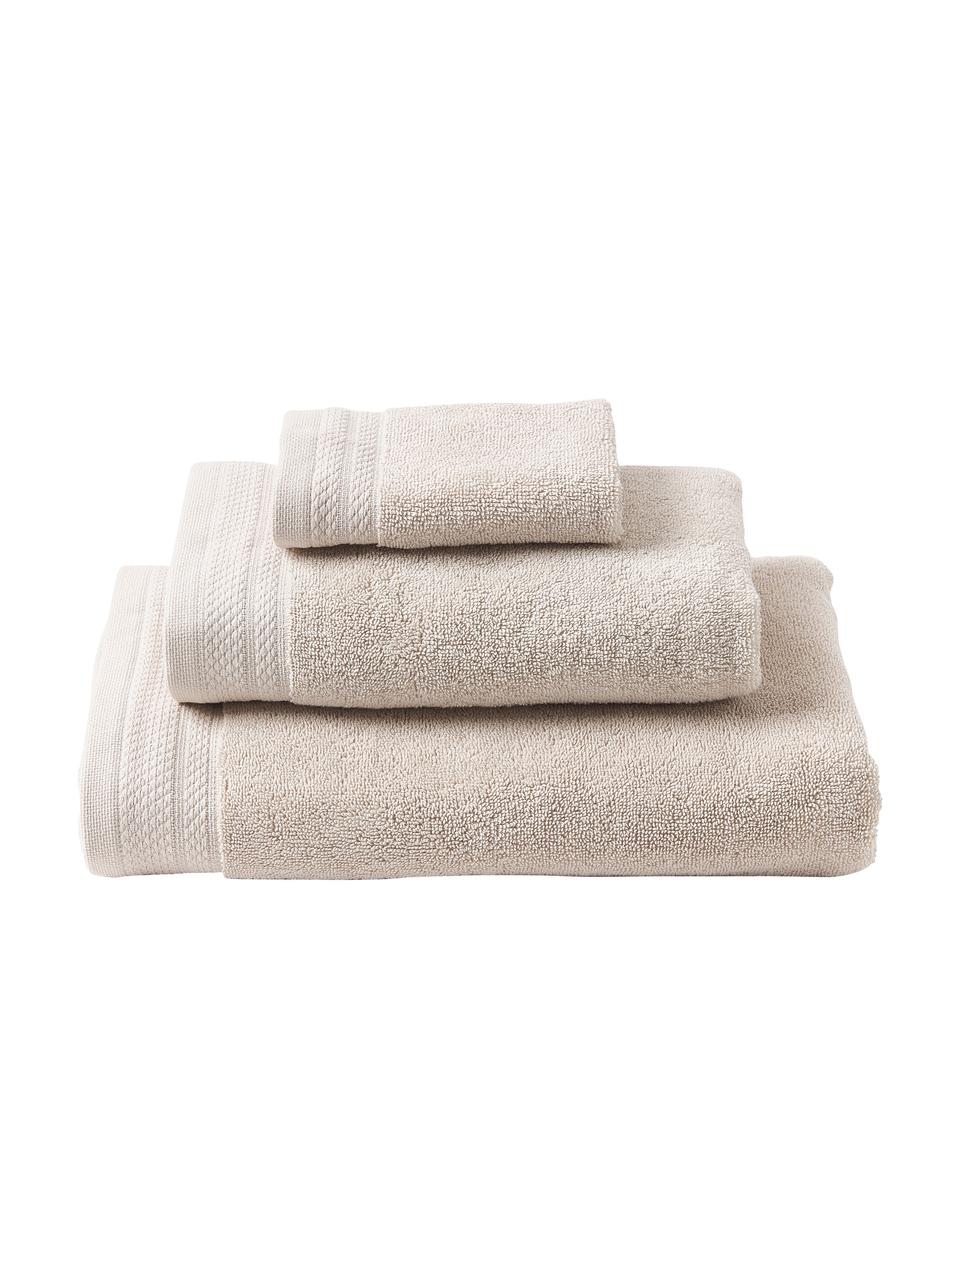 Set 3 asciugamani in cotone organico Premium, 100% cotone organico certificato GOTS (da GCL International, GCL-300517).
Qualità pesante, 600 g/m², Beige chiaro, Set in varie misure